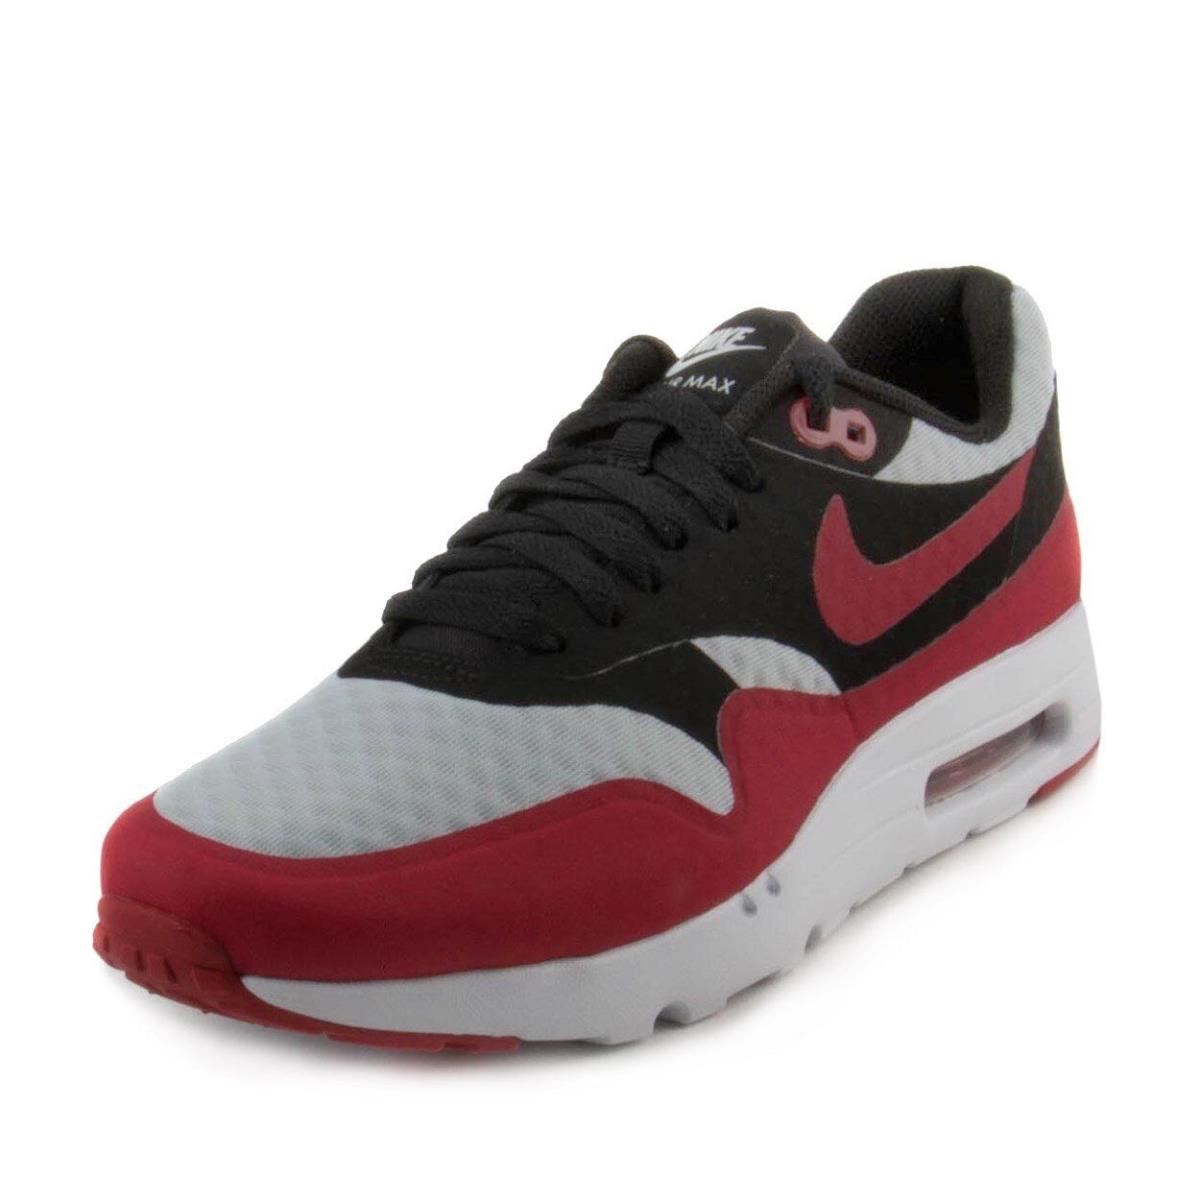 Men s Nike Air Max 1 Ultra Essential Bred Shoe Size 10.5 - Platinum, Red, Black